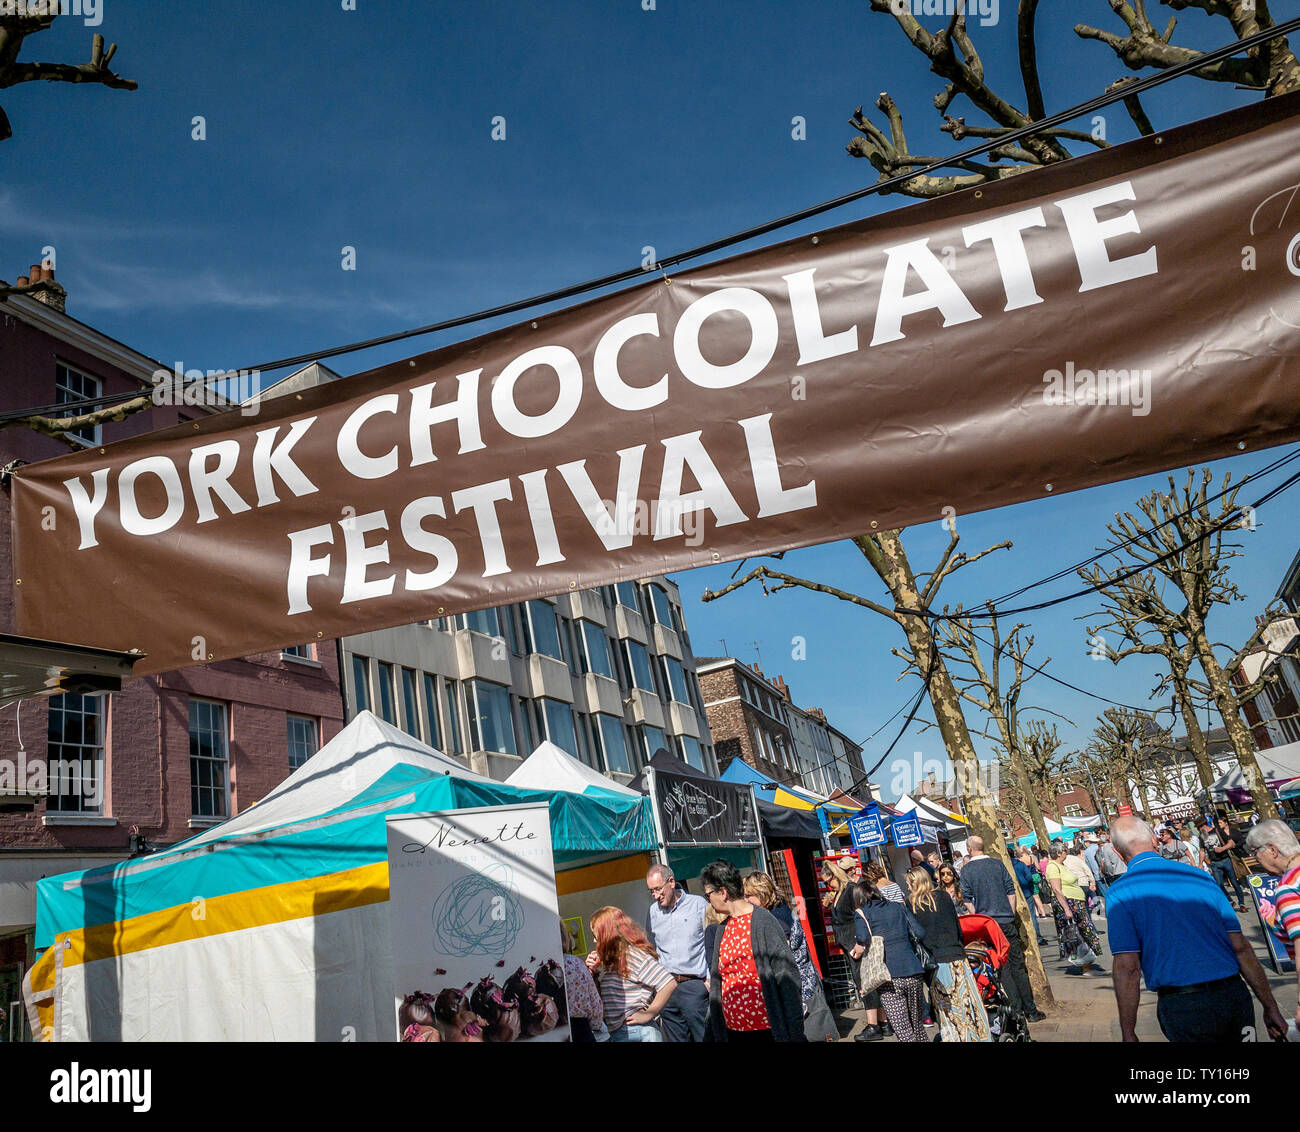 York Chocolate Festival Anmelden die Parliament Street, New York. Stockfoto